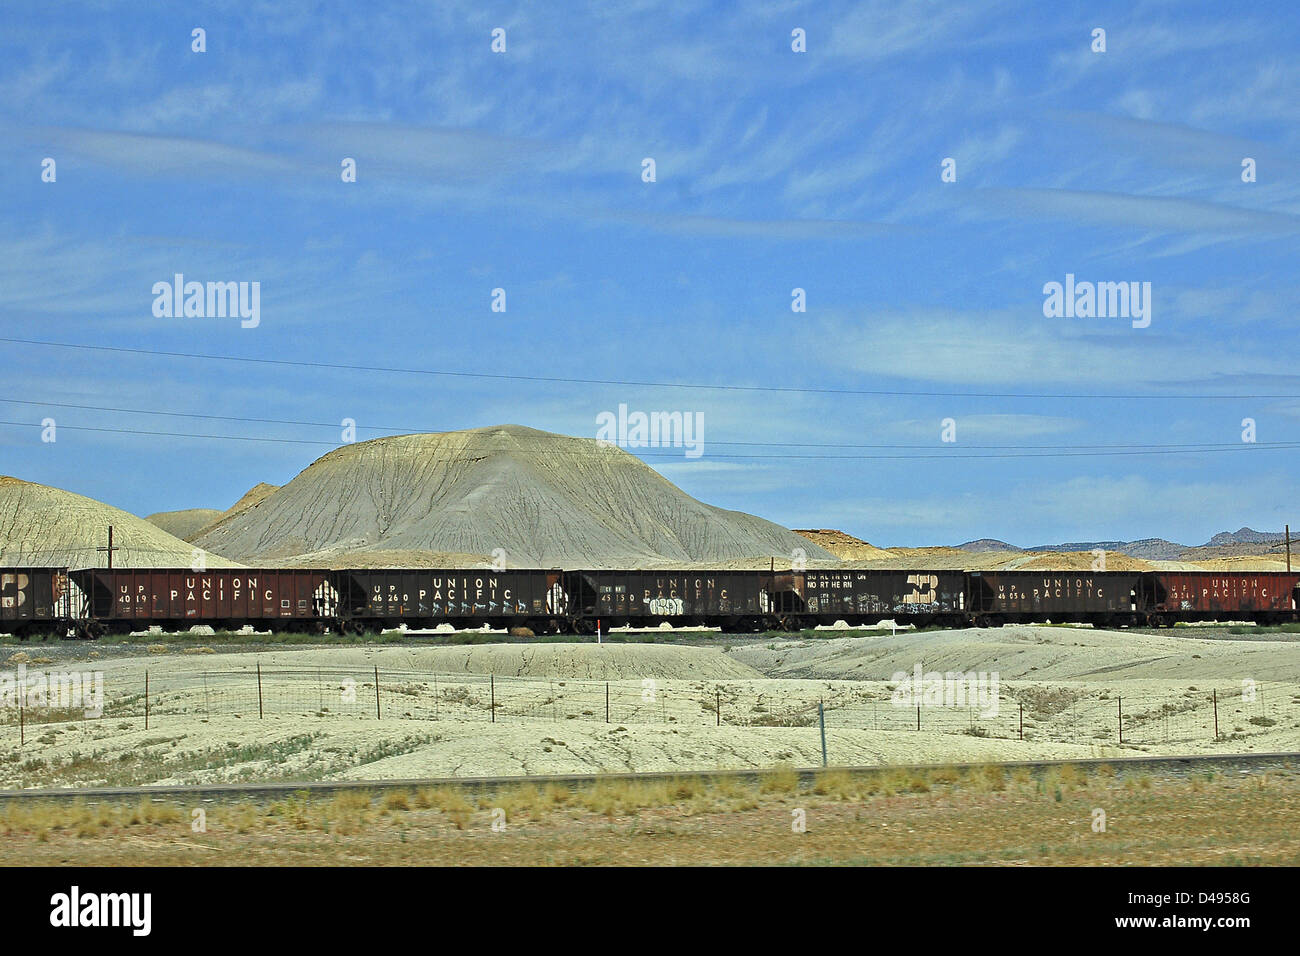 Old abandoned train close to Canyonlands, Canyon,United States Stock Photo